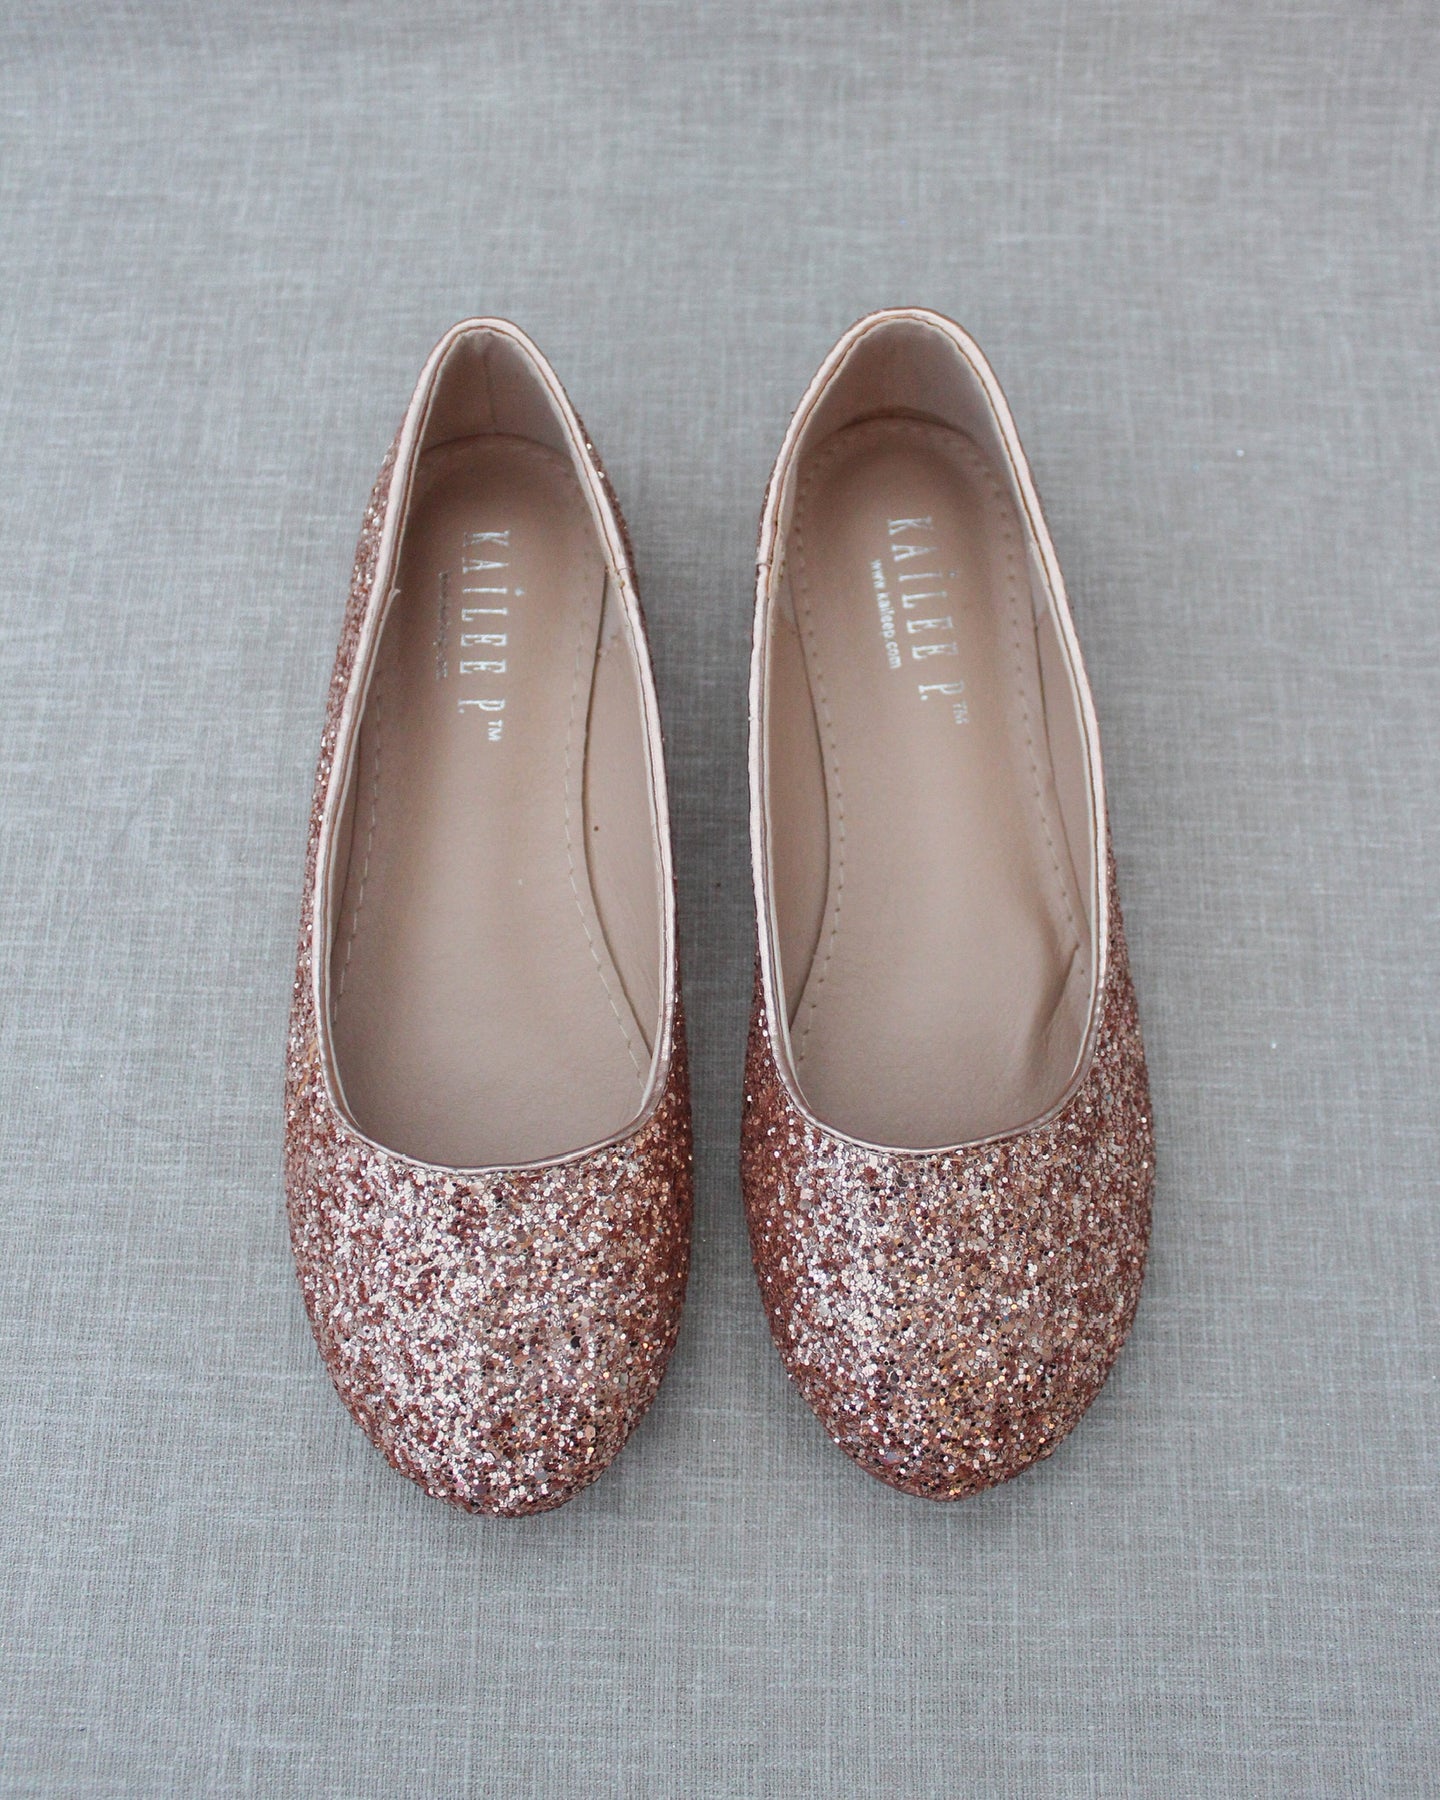 Rose Gold Glitter Round Toe Flats, Wedding Shoes, Bridesmaids Flats 10